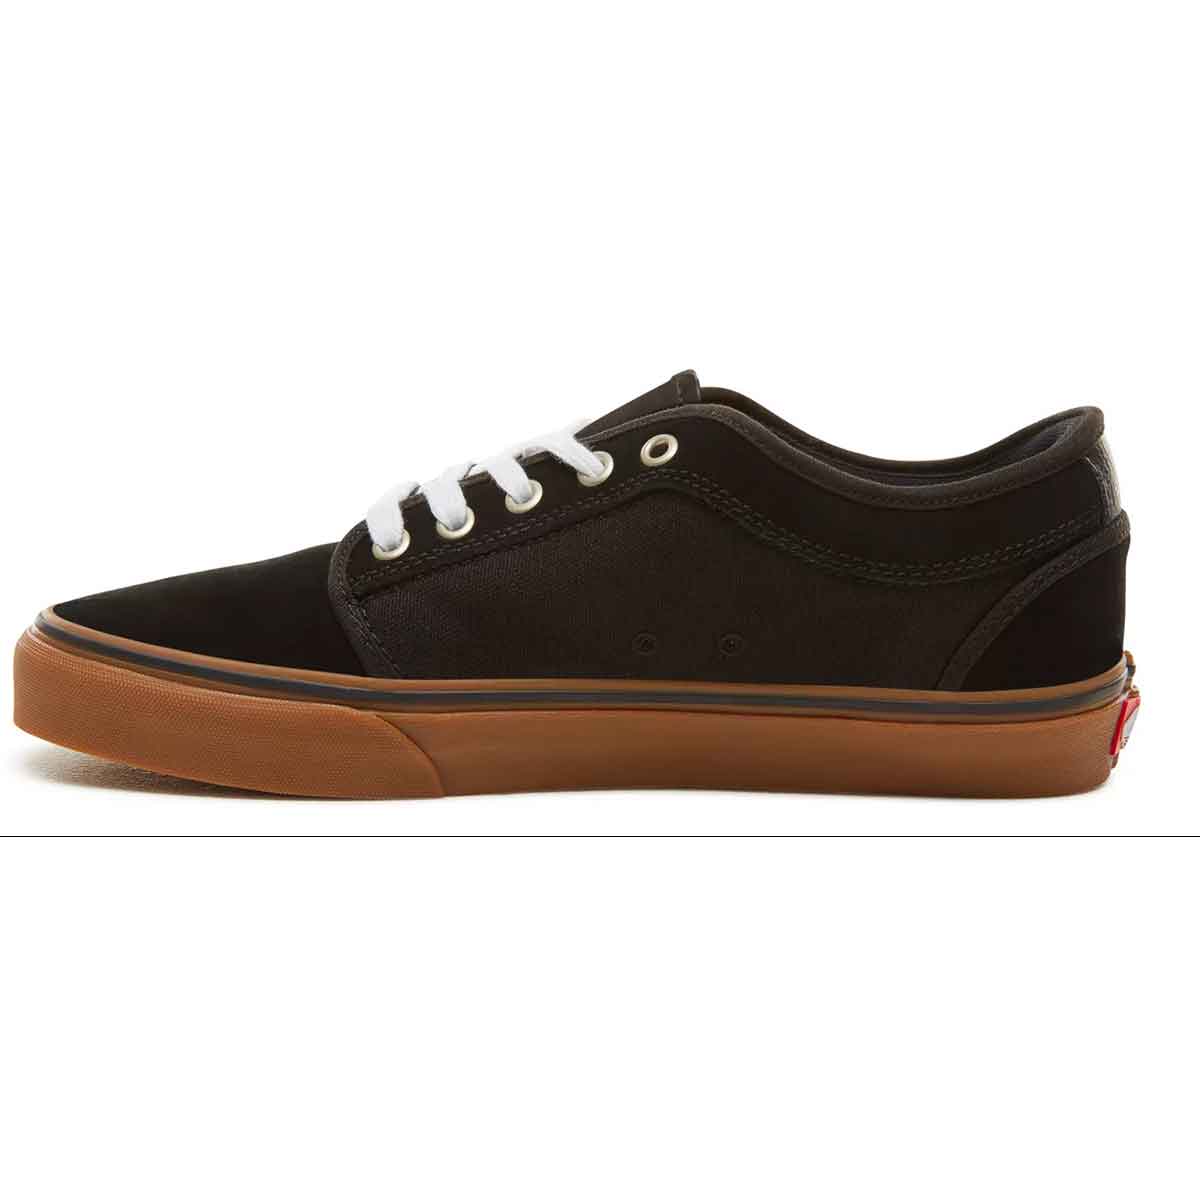 vans chukka low pro black & gum skate shoes